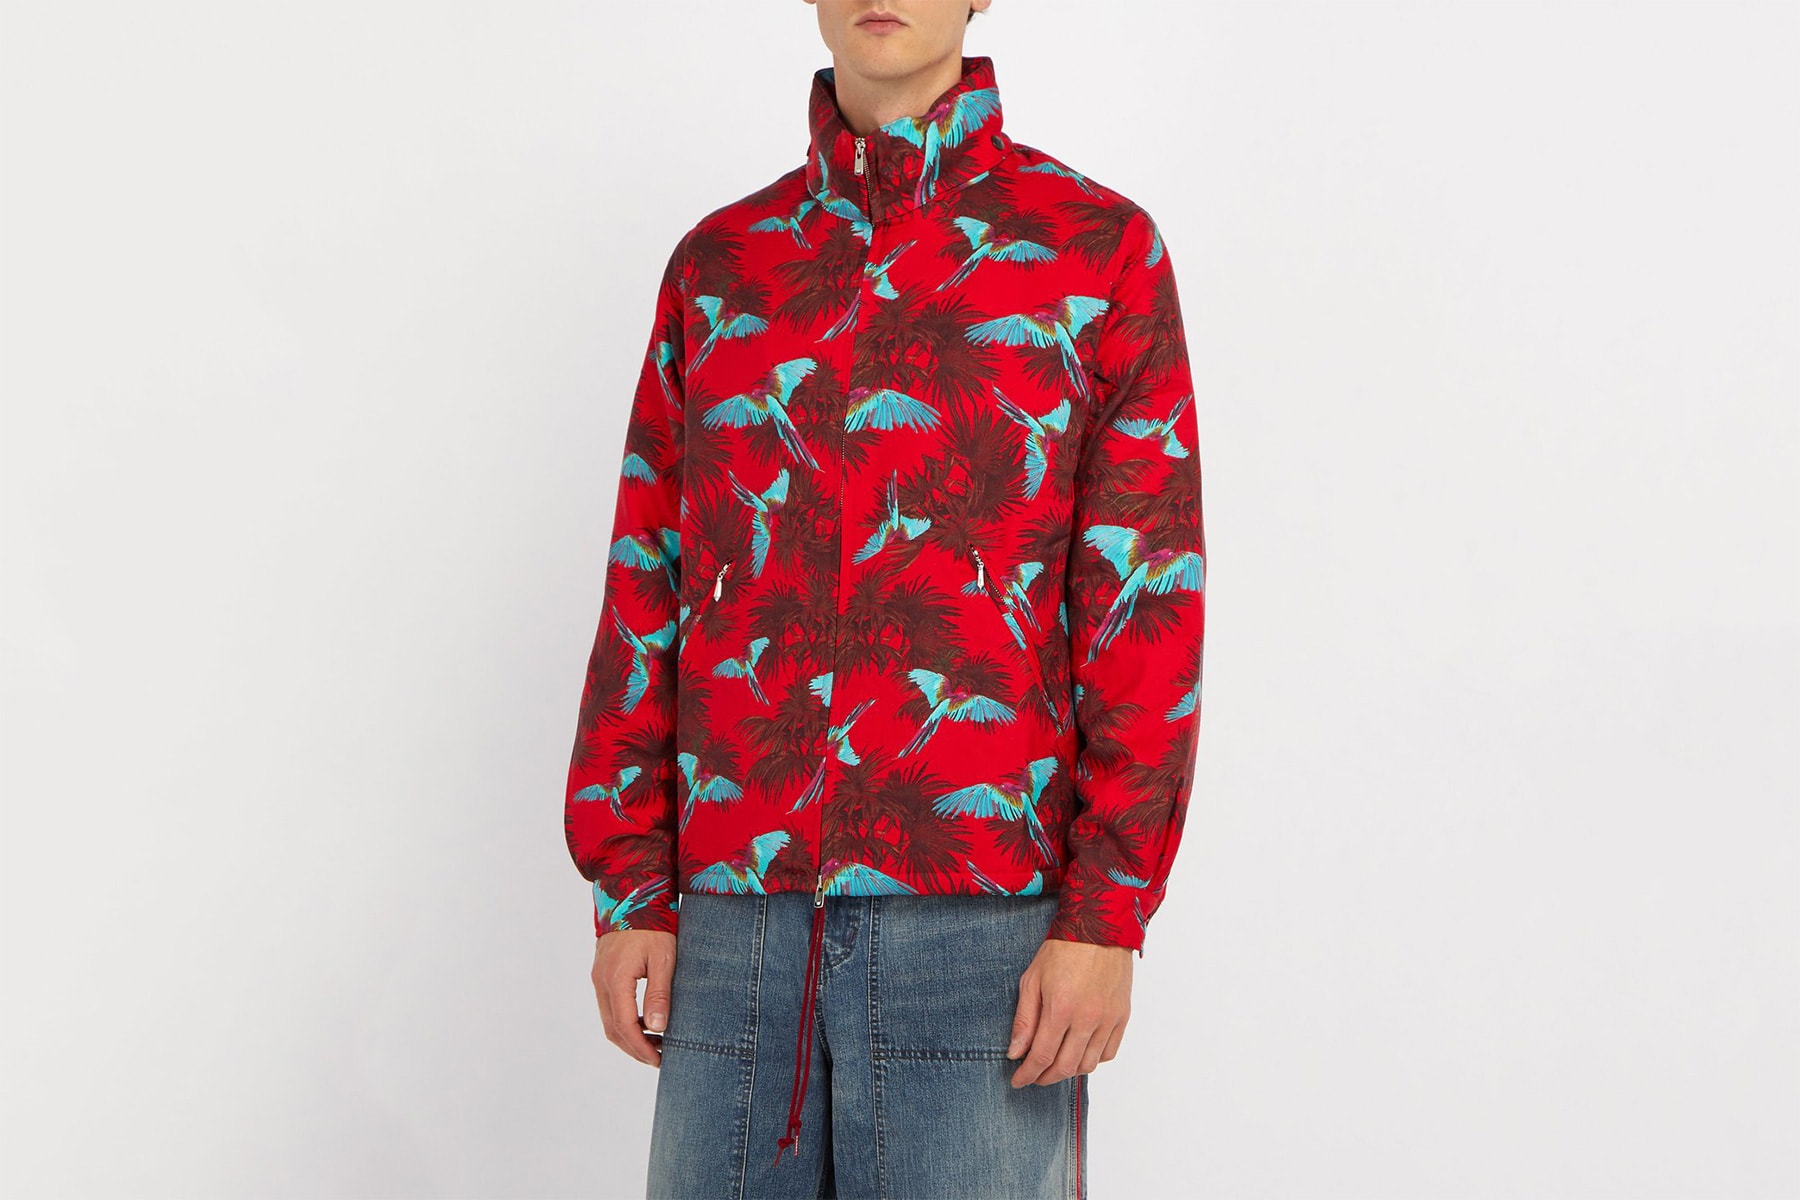 needles bird print wool jacket 2018 september fashion